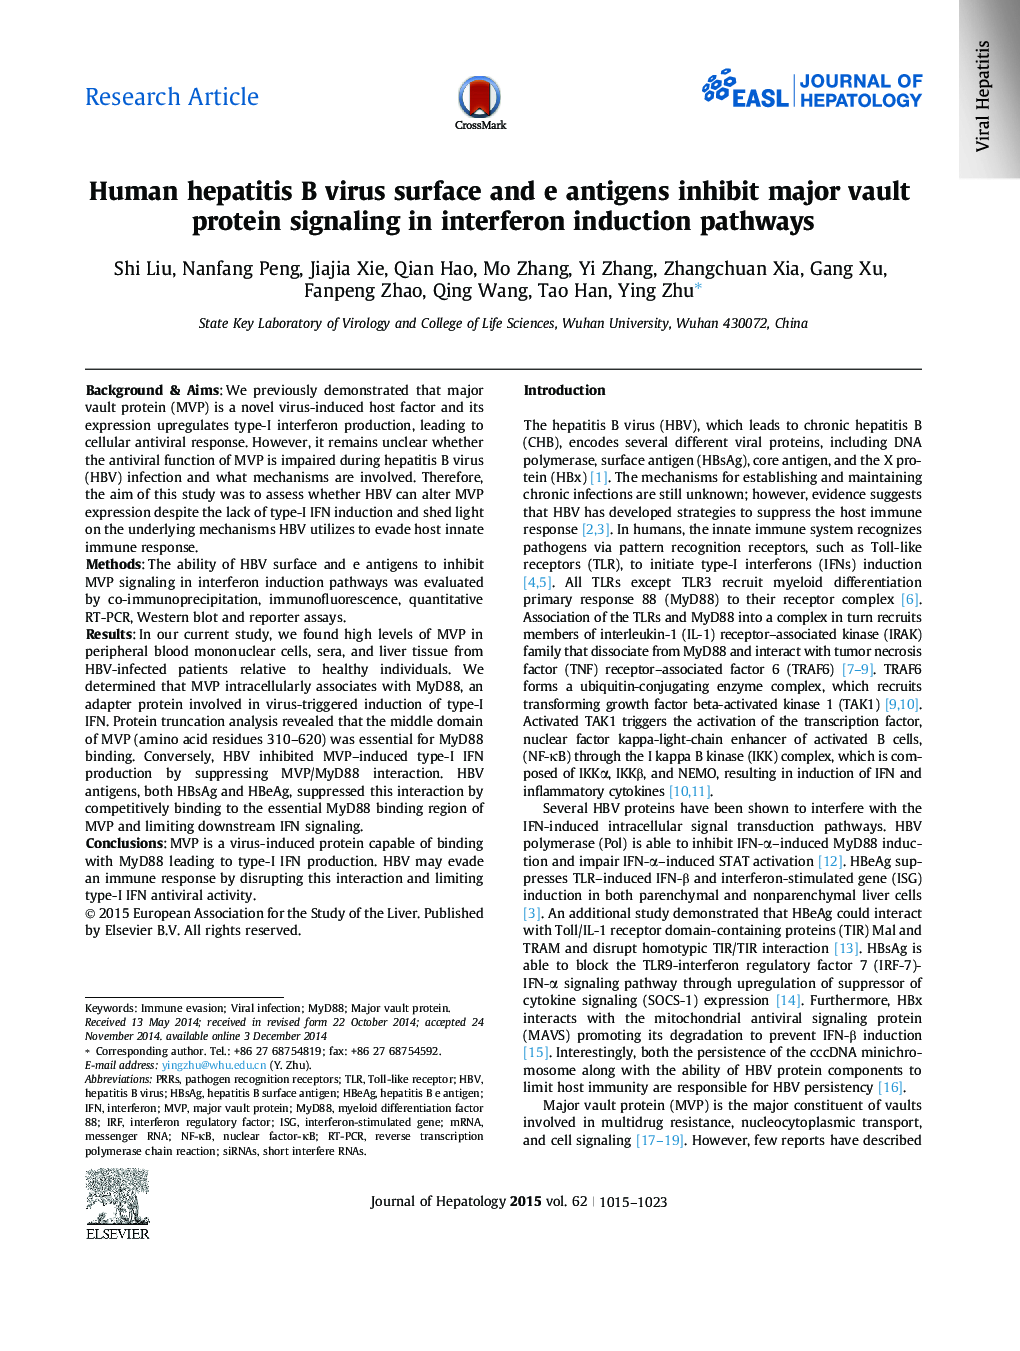 Research ArticleHuman hepatitis B virus surface and e antigens inhibit major vault protein signaling in interferon induction pathways